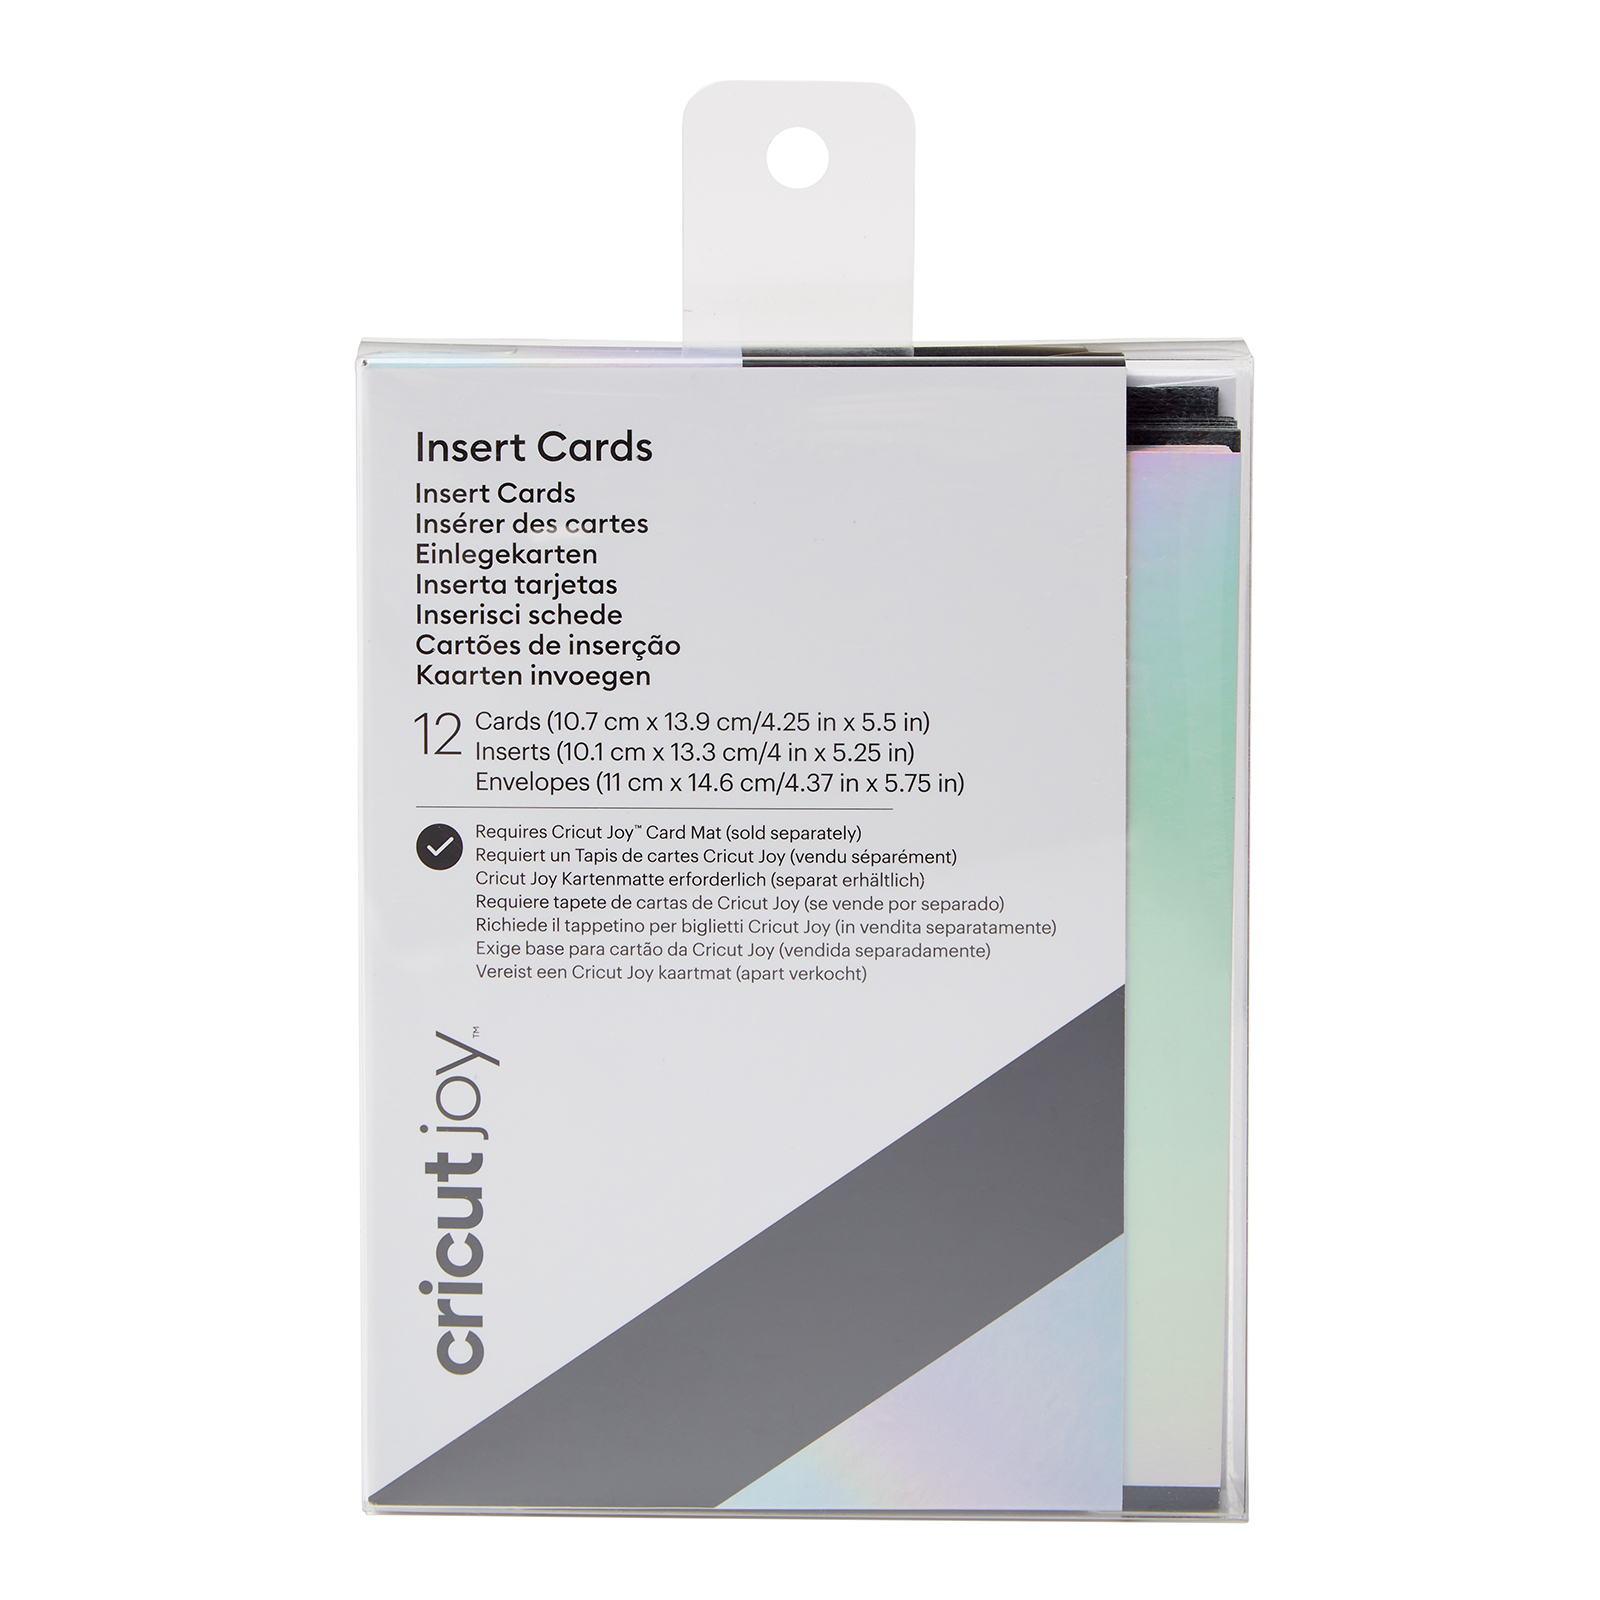 Cricut Joy • Insert Cards Nero Argento Olografico 13,9x10,7cm 12 fogli